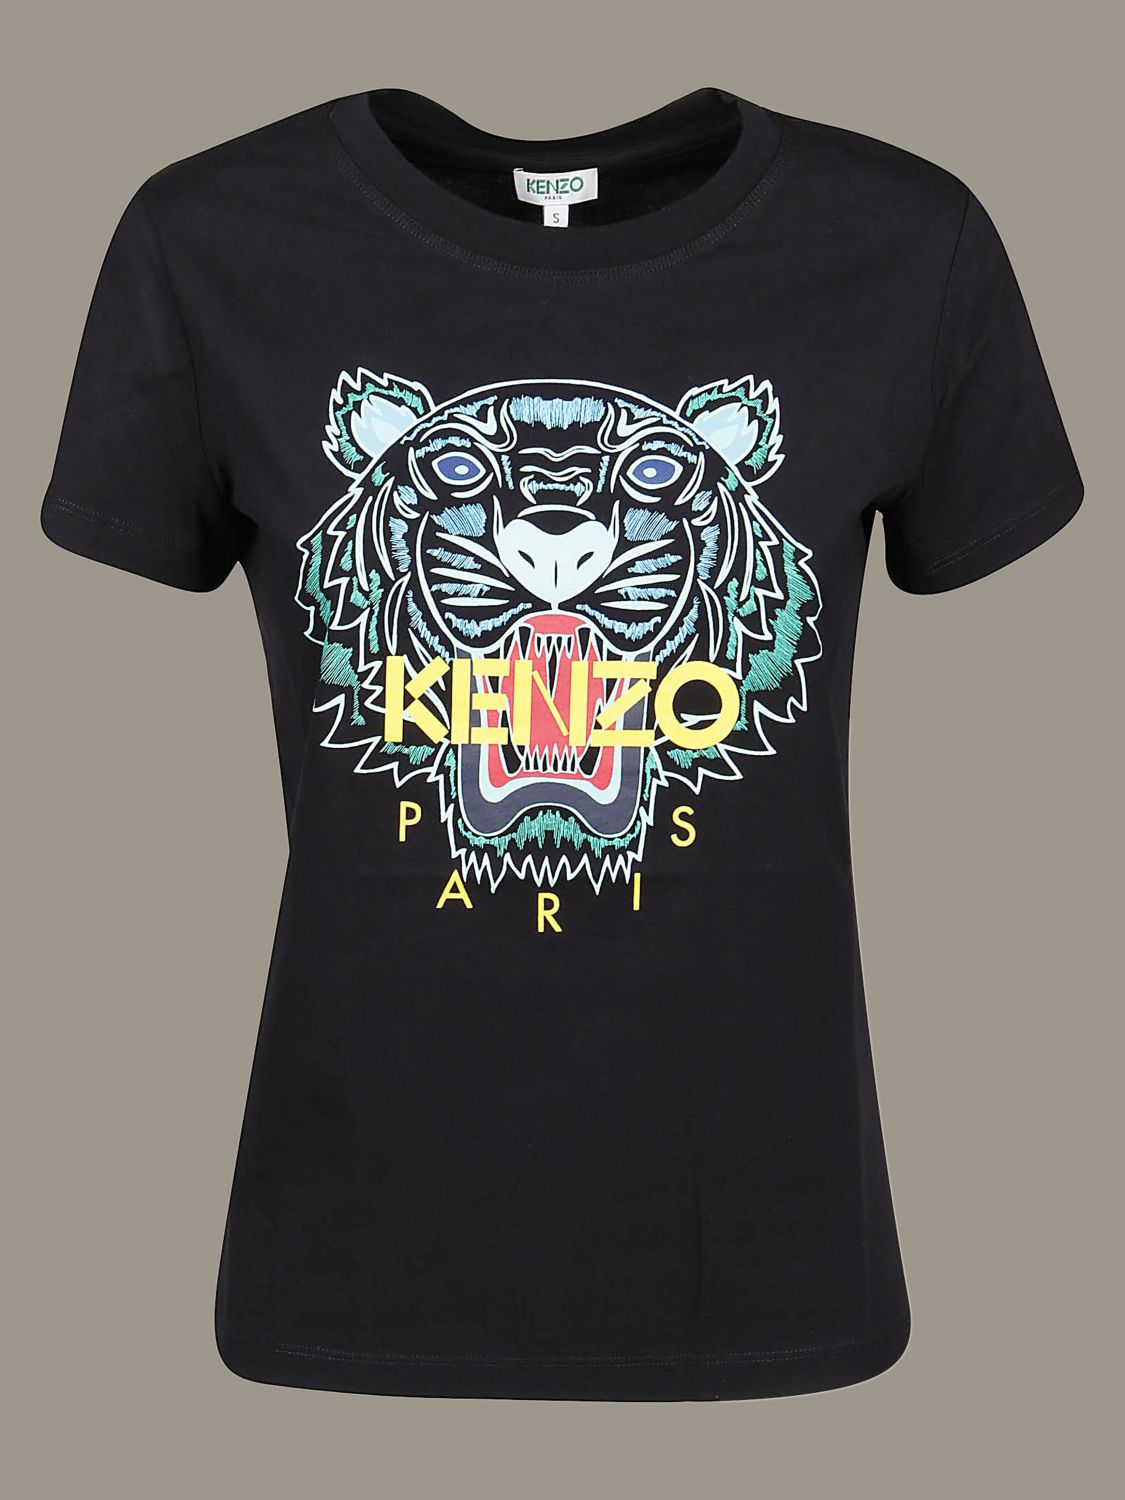 kenzo shirts